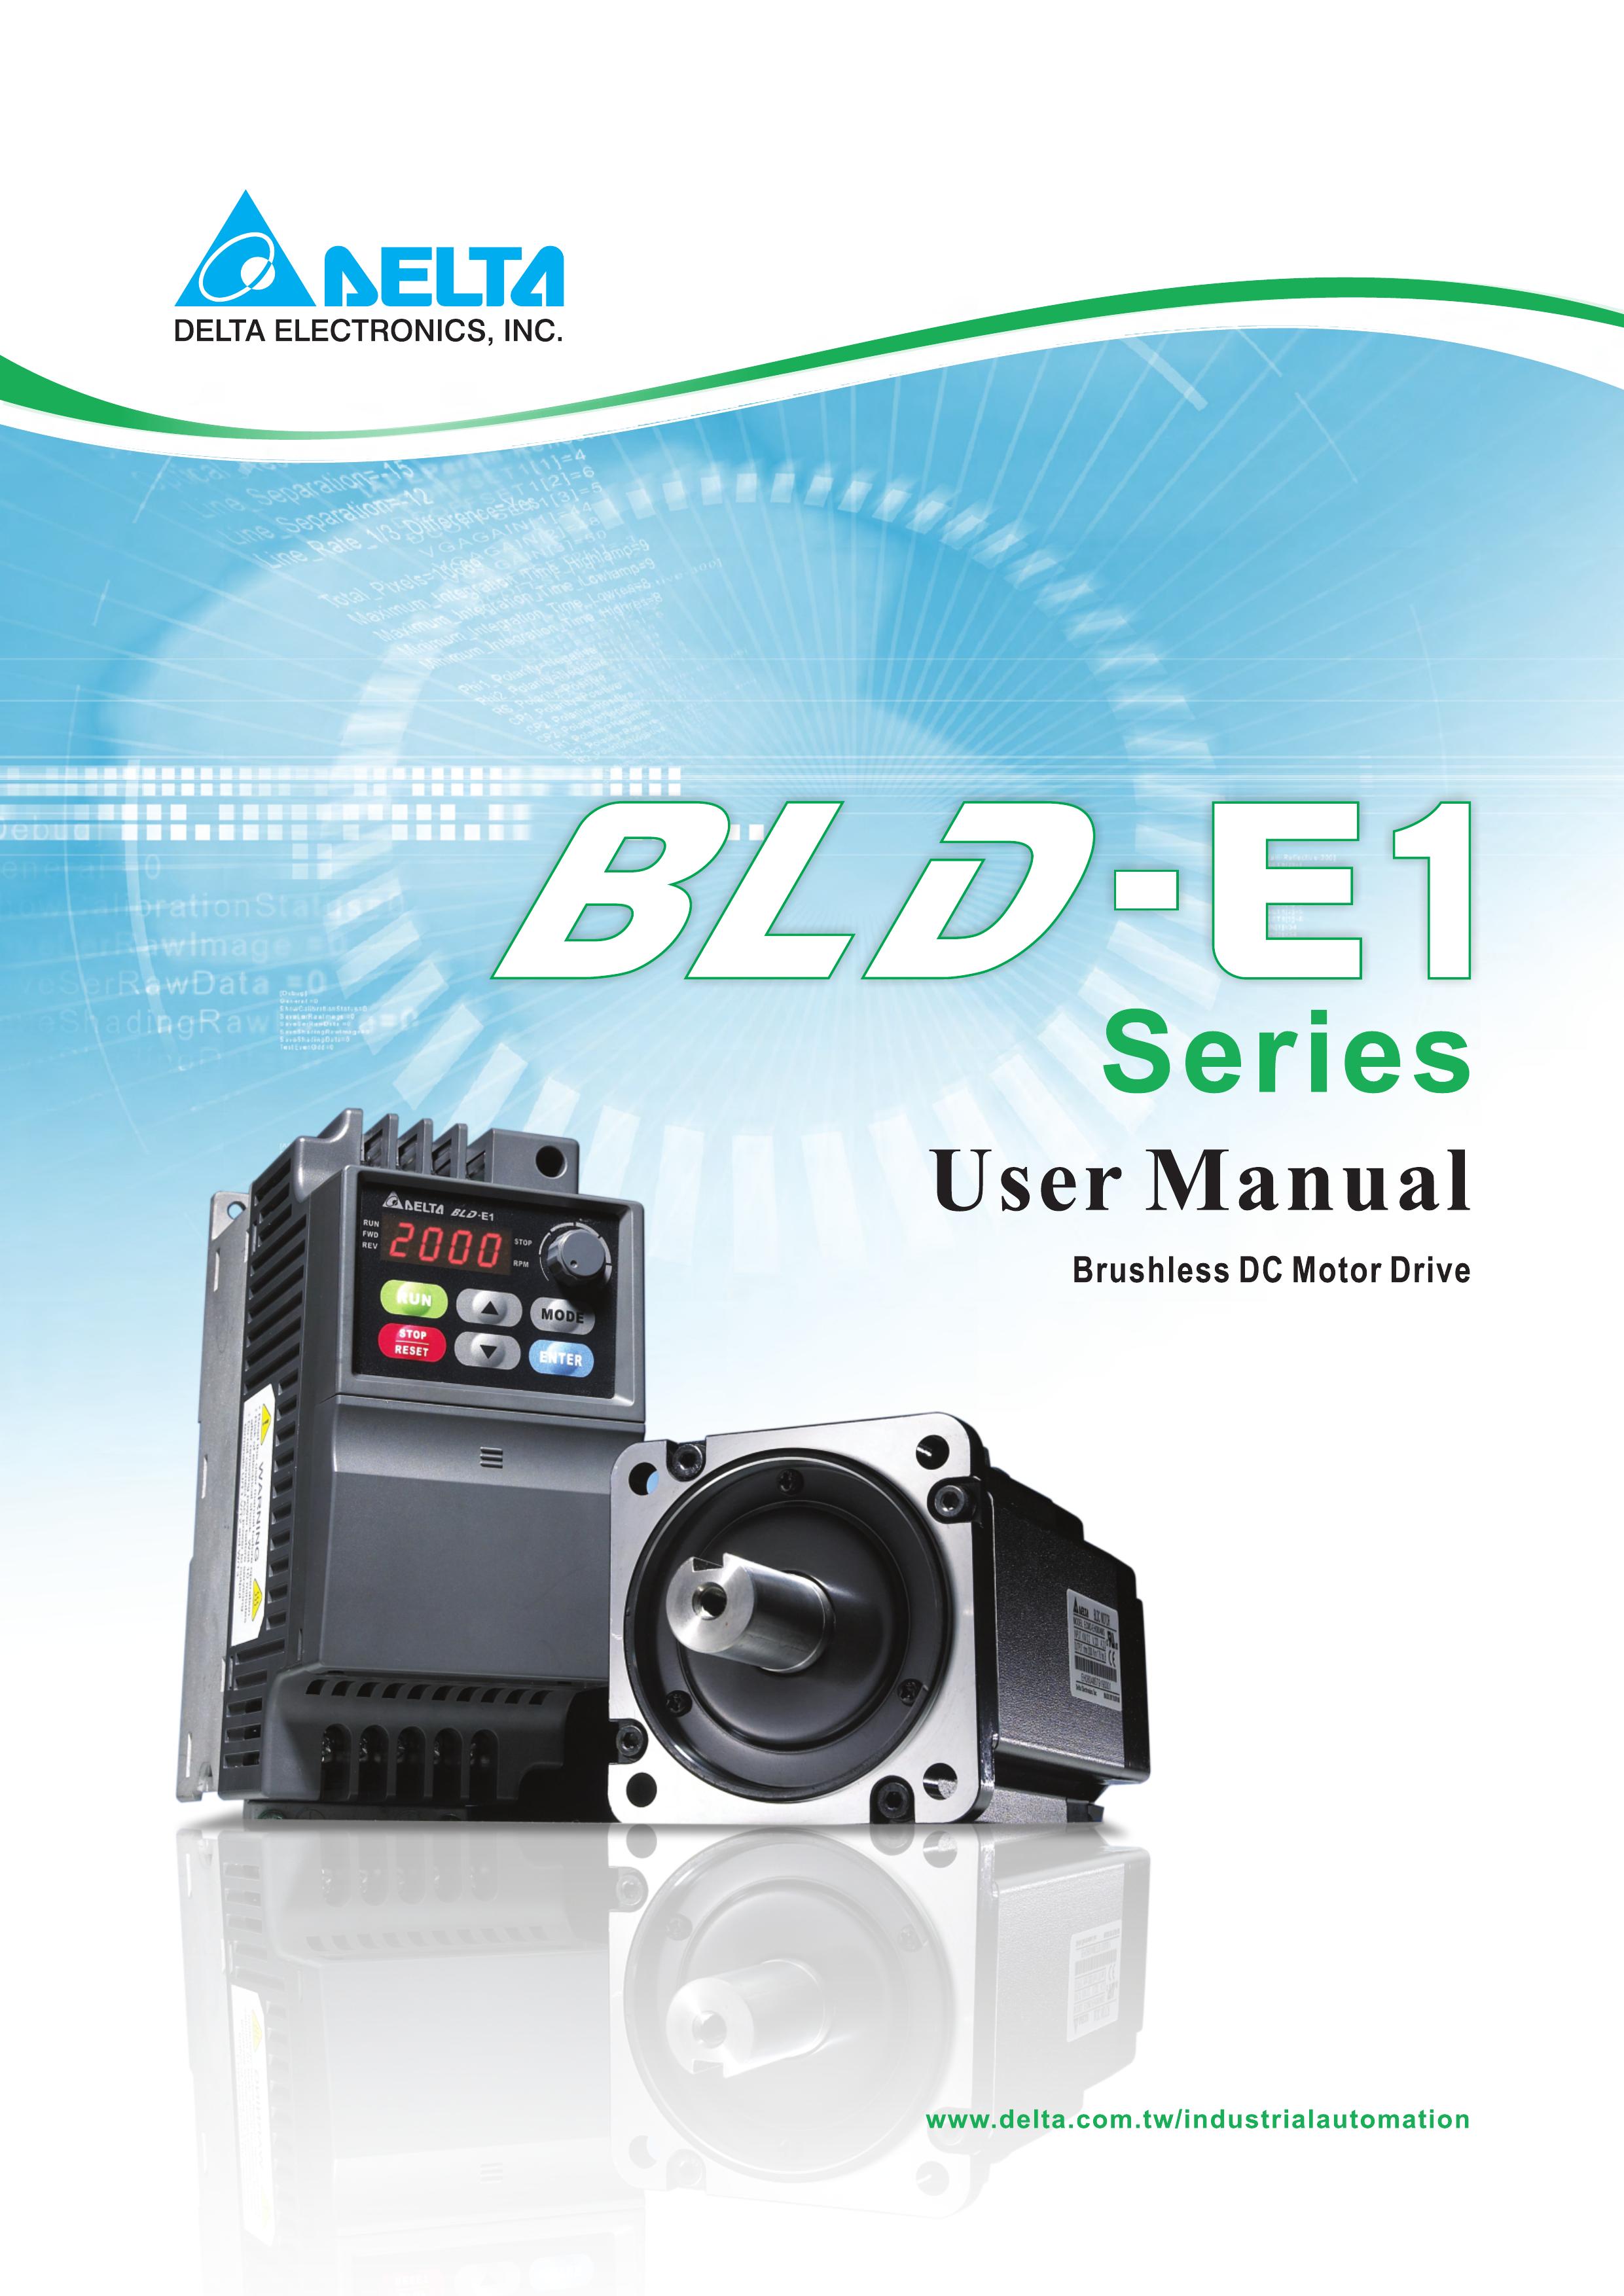 Delta BLD-E1 Series Outboard Motor User Manual